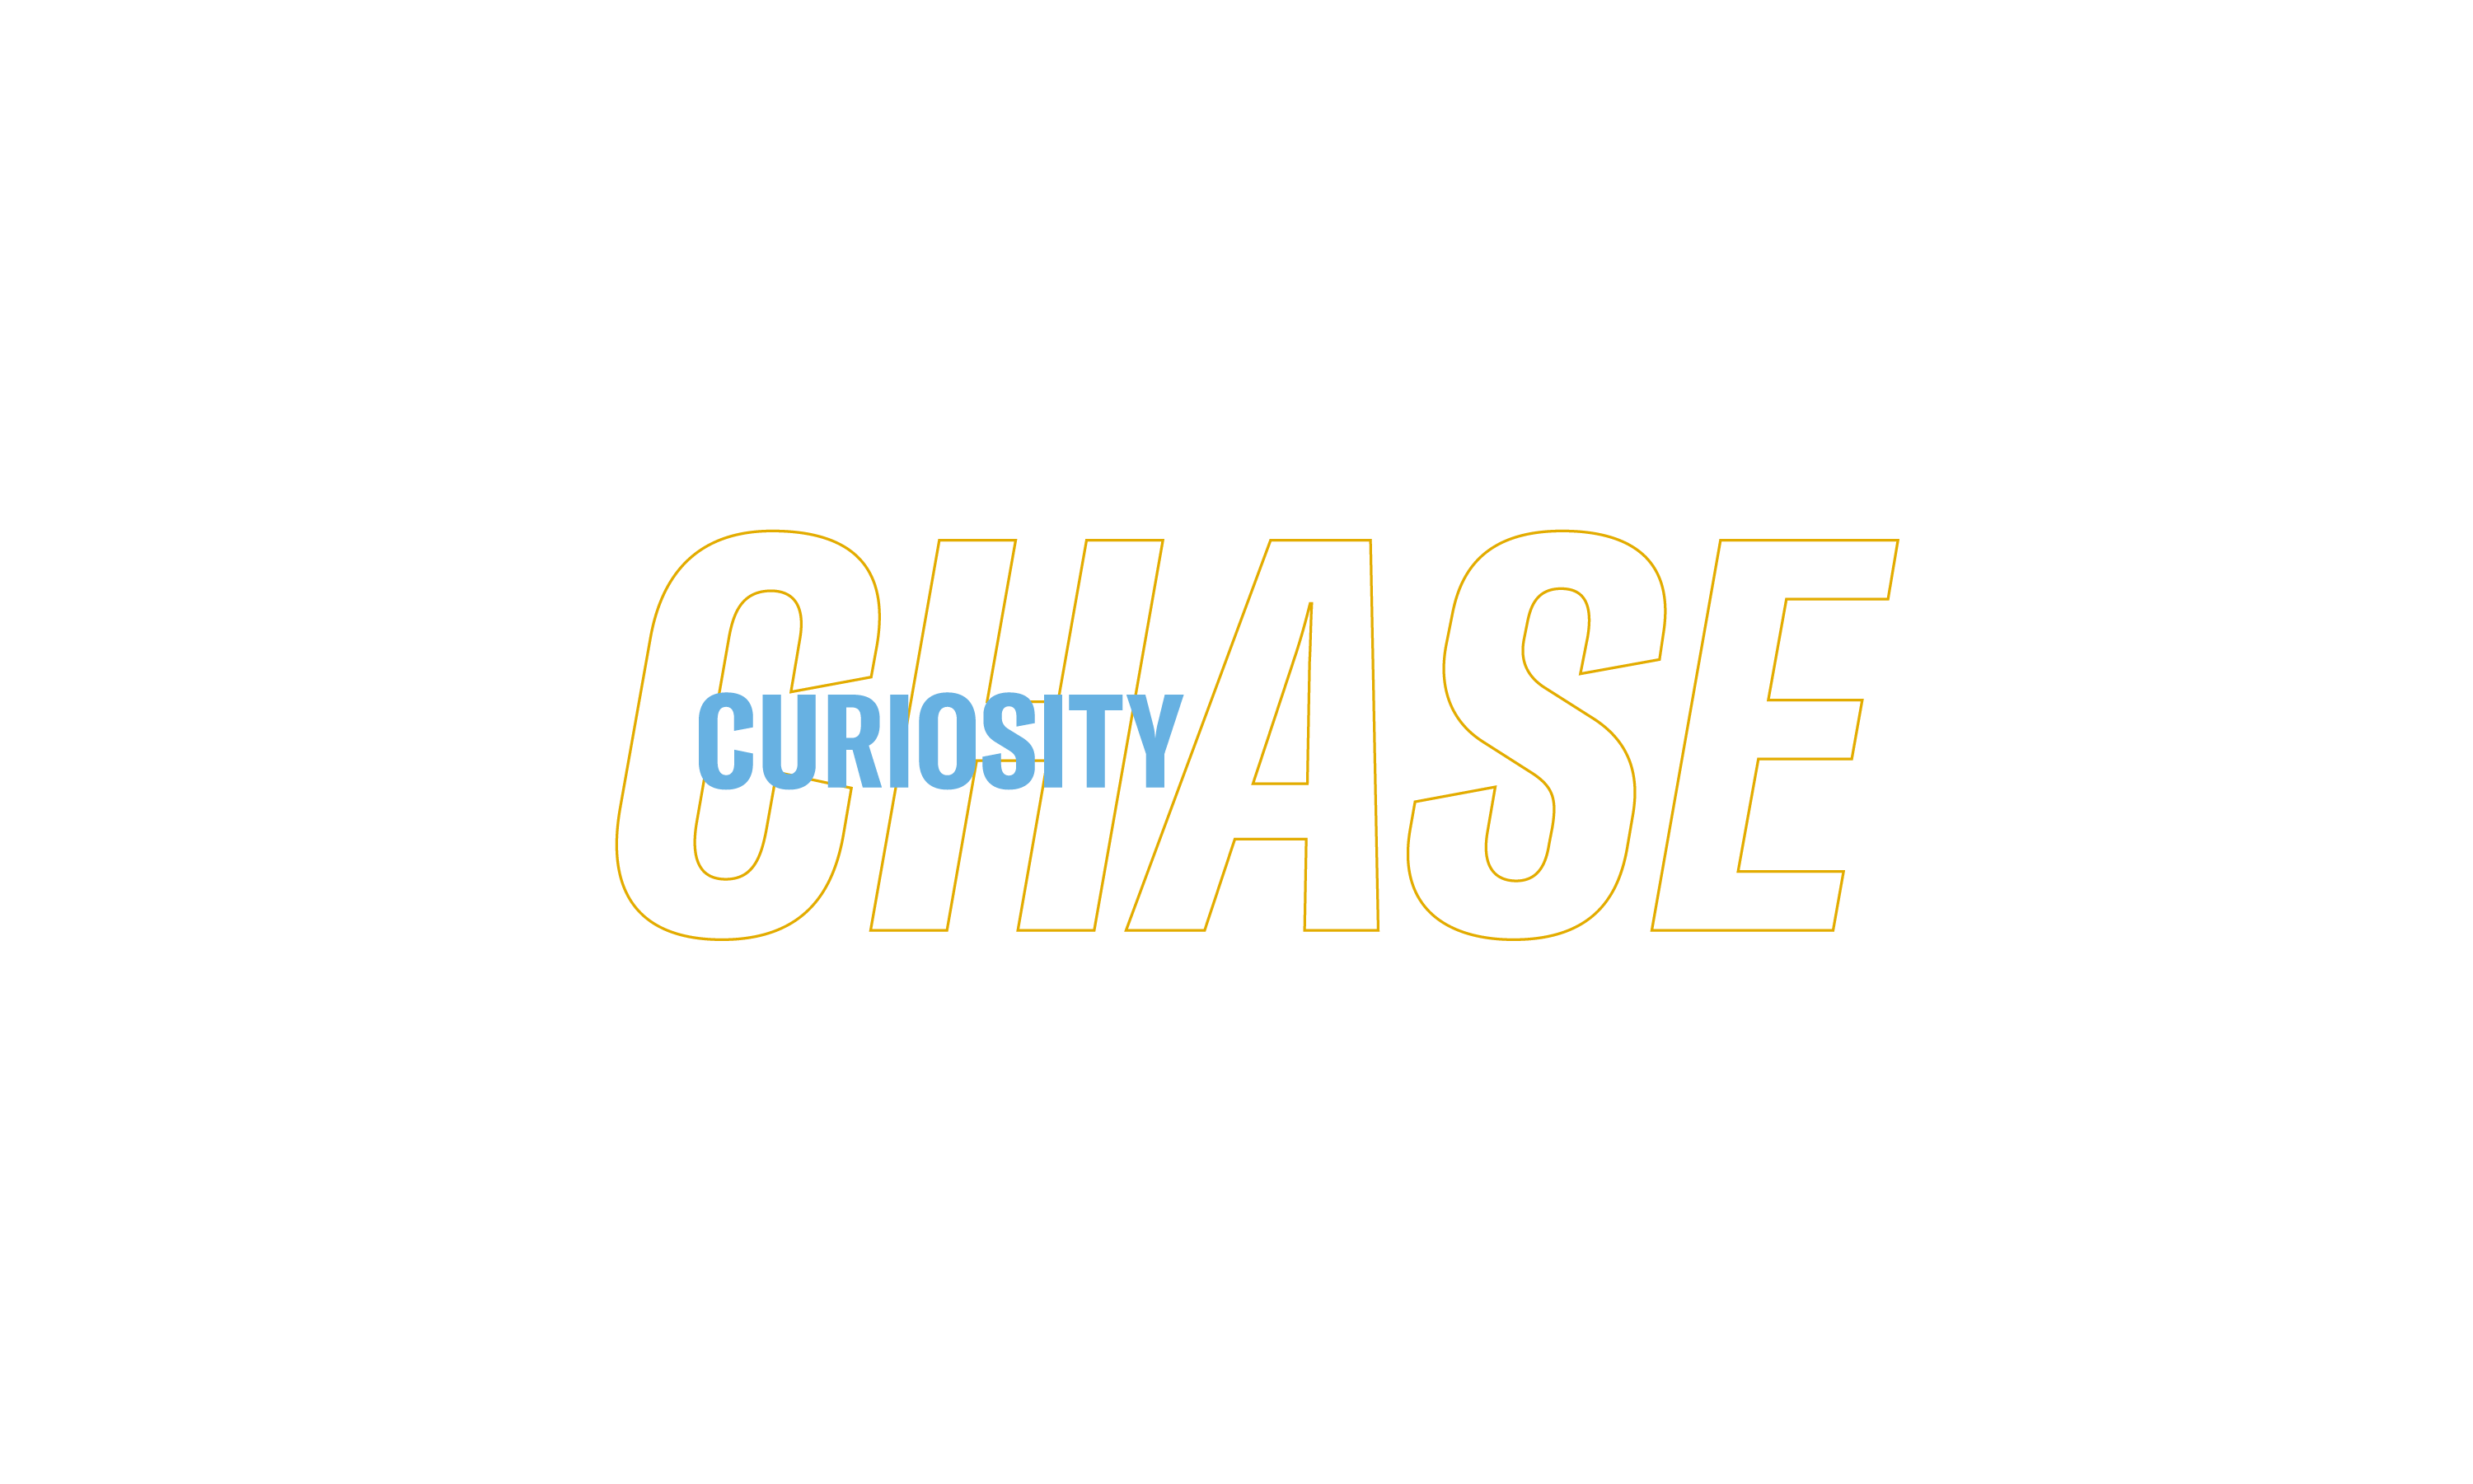 Chase Curiosity